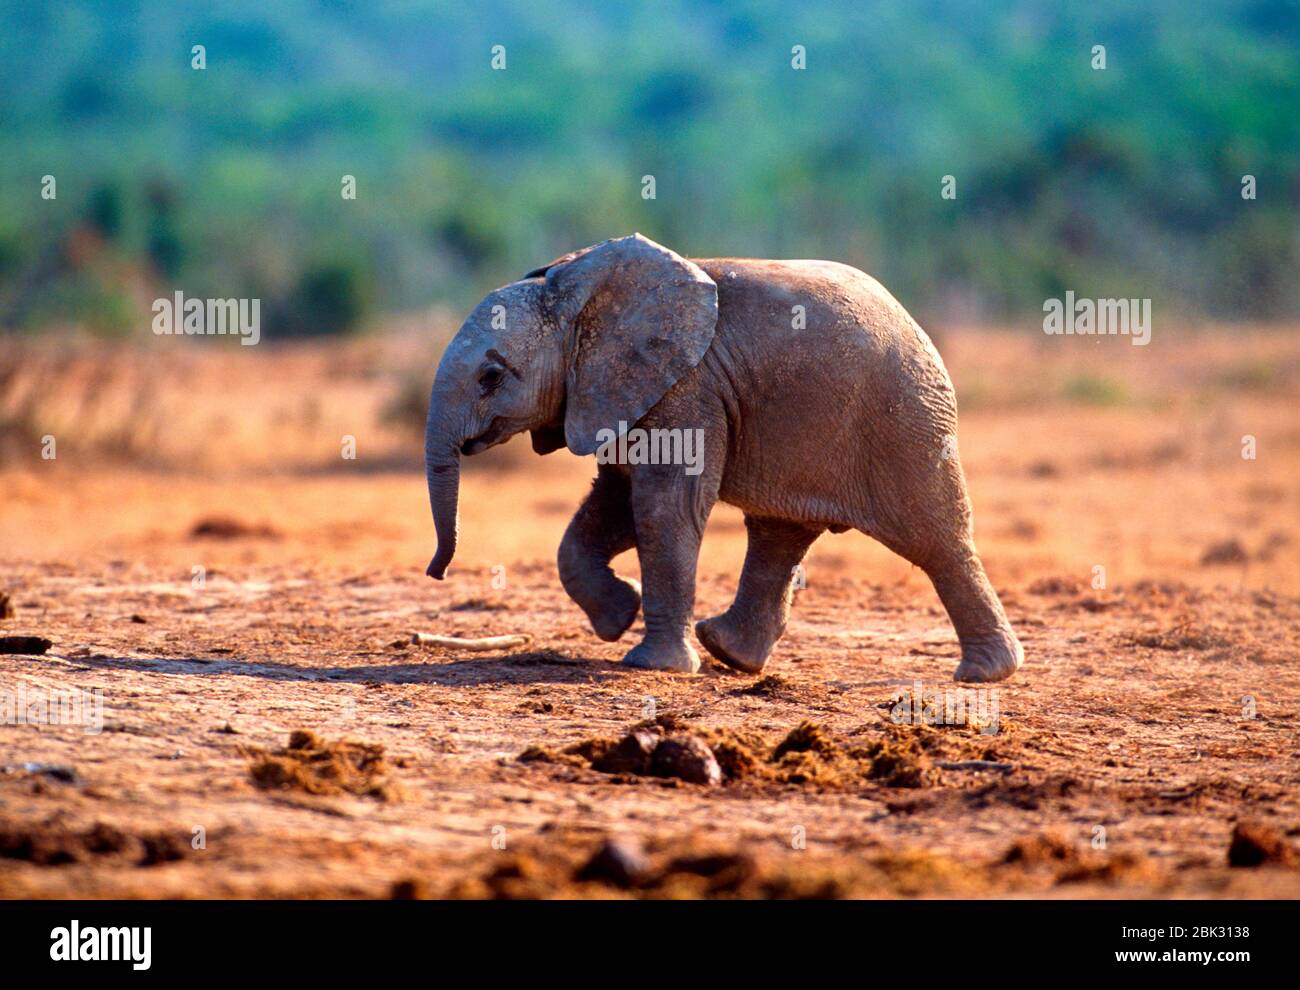 Elefante africano, Loxodonta africana, Elephantidae, bambino, giovane, animale, mammifero, Parco Nazionale degli Elefanti Addo, Sudafrica Foto Stock